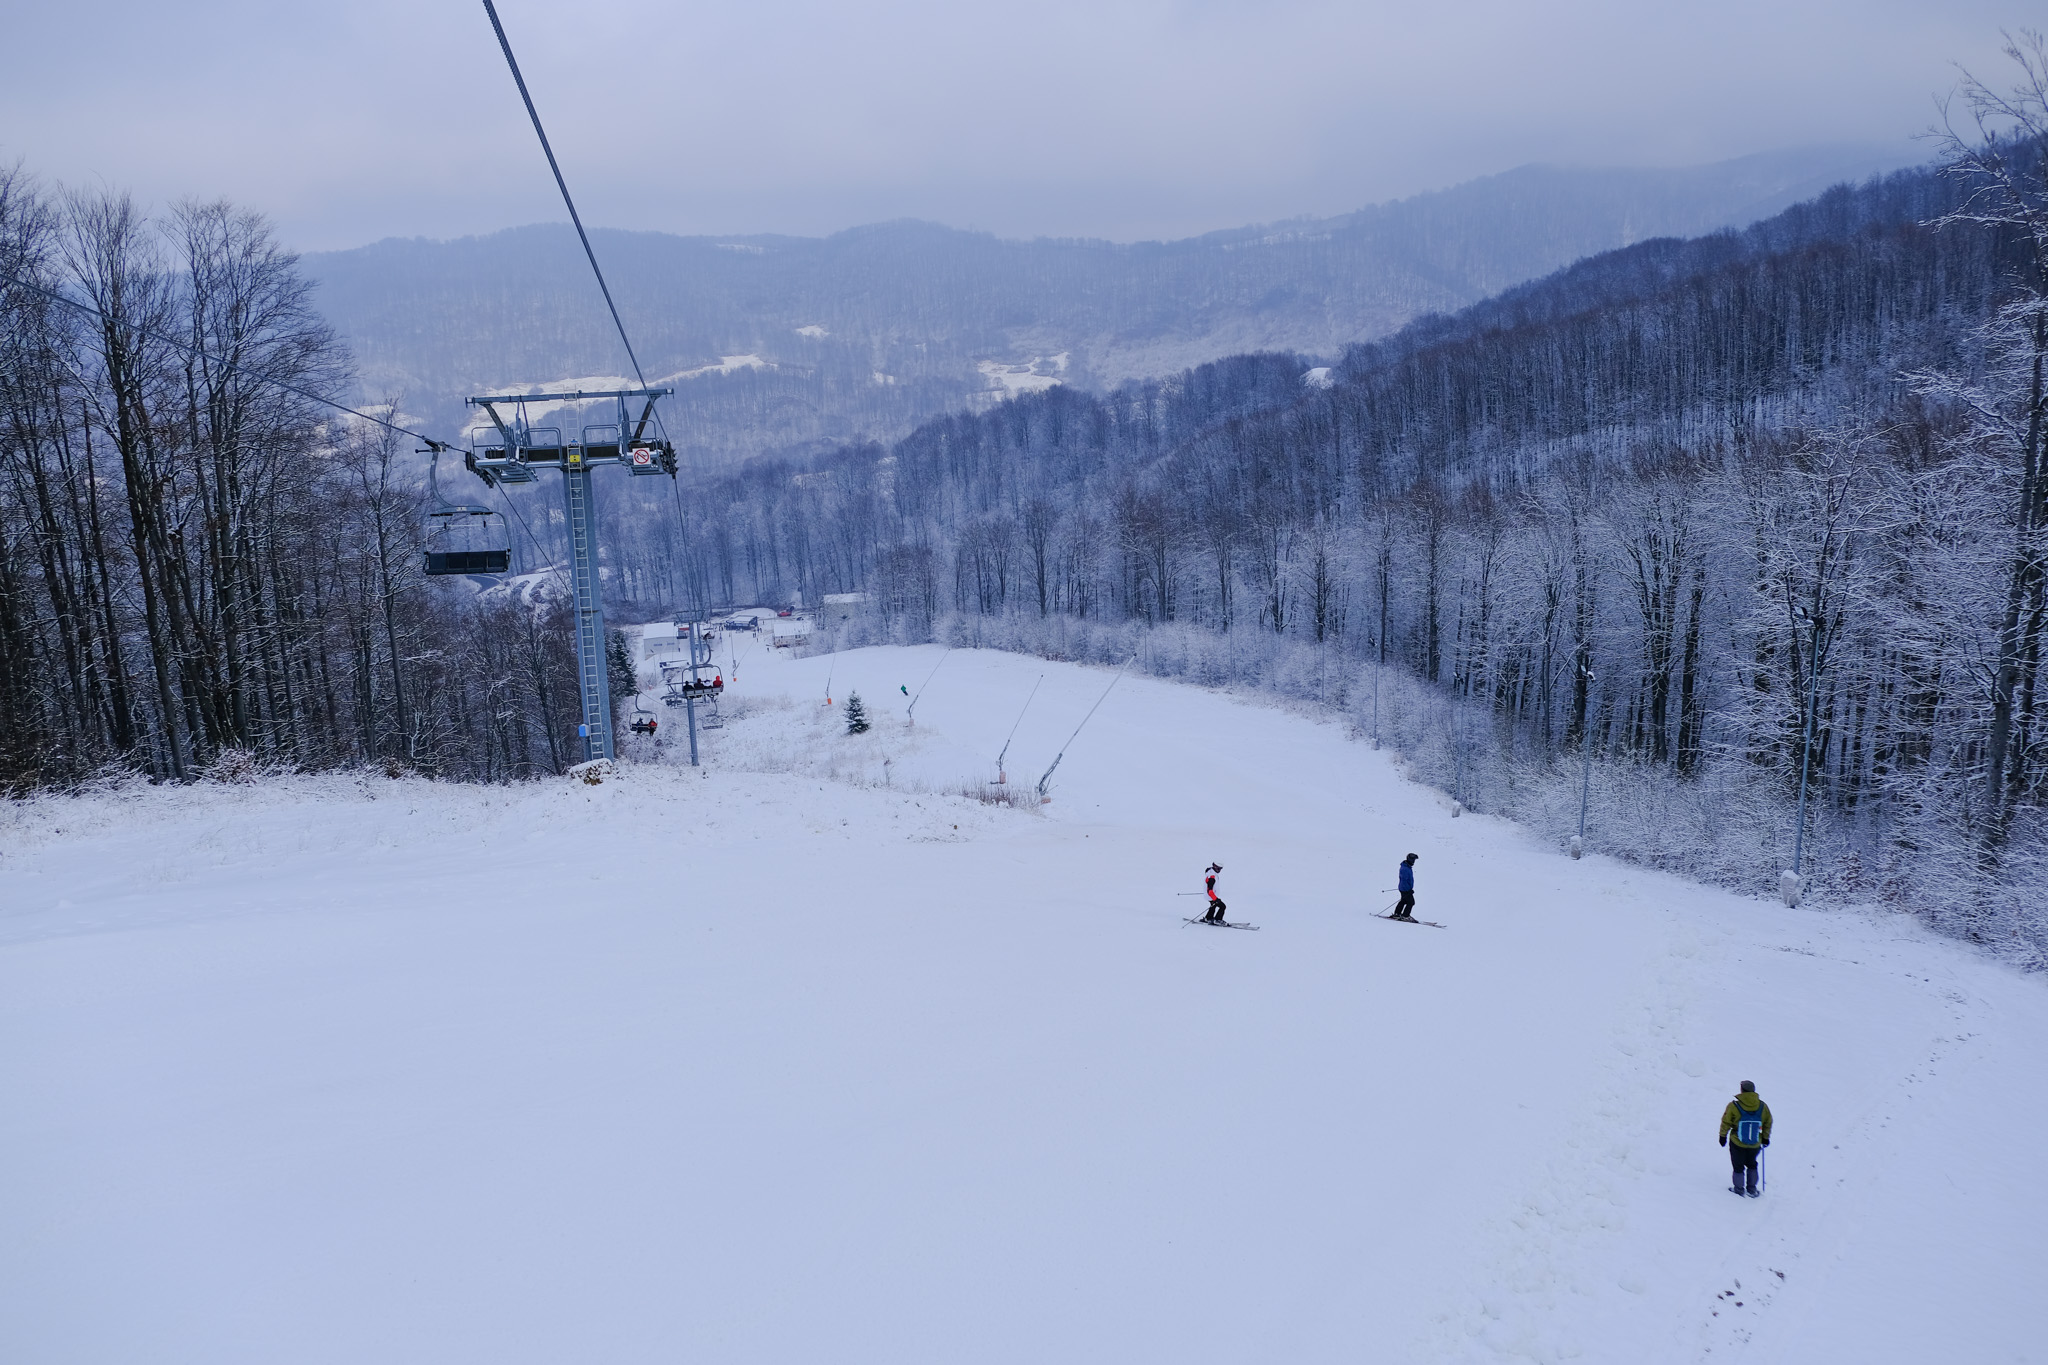 New Ski Slope Awaits Sport Lovers near the Hungarian Border